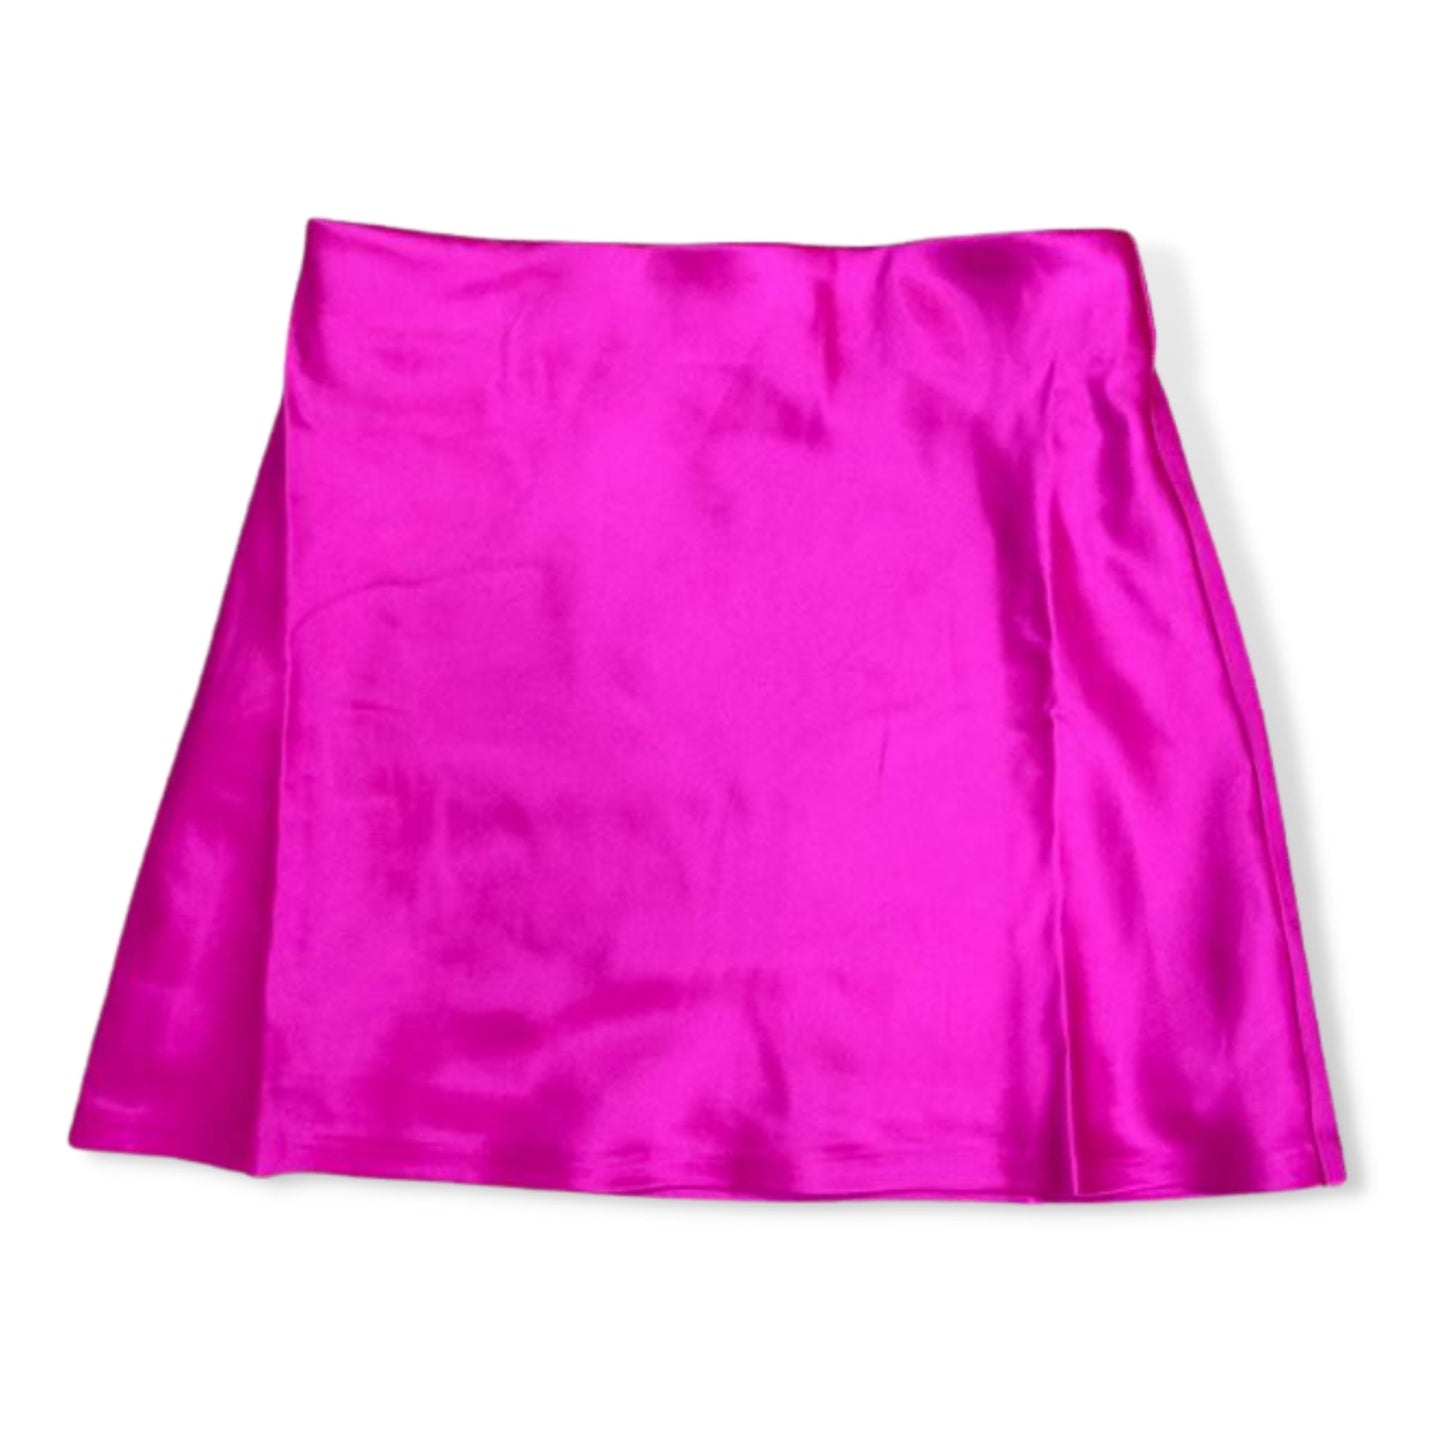 KatieJNYC Shocking Pink Devyn Satin Skirt - a Spirit Animal - Skirt $60-$90 active August 2023 bottoms